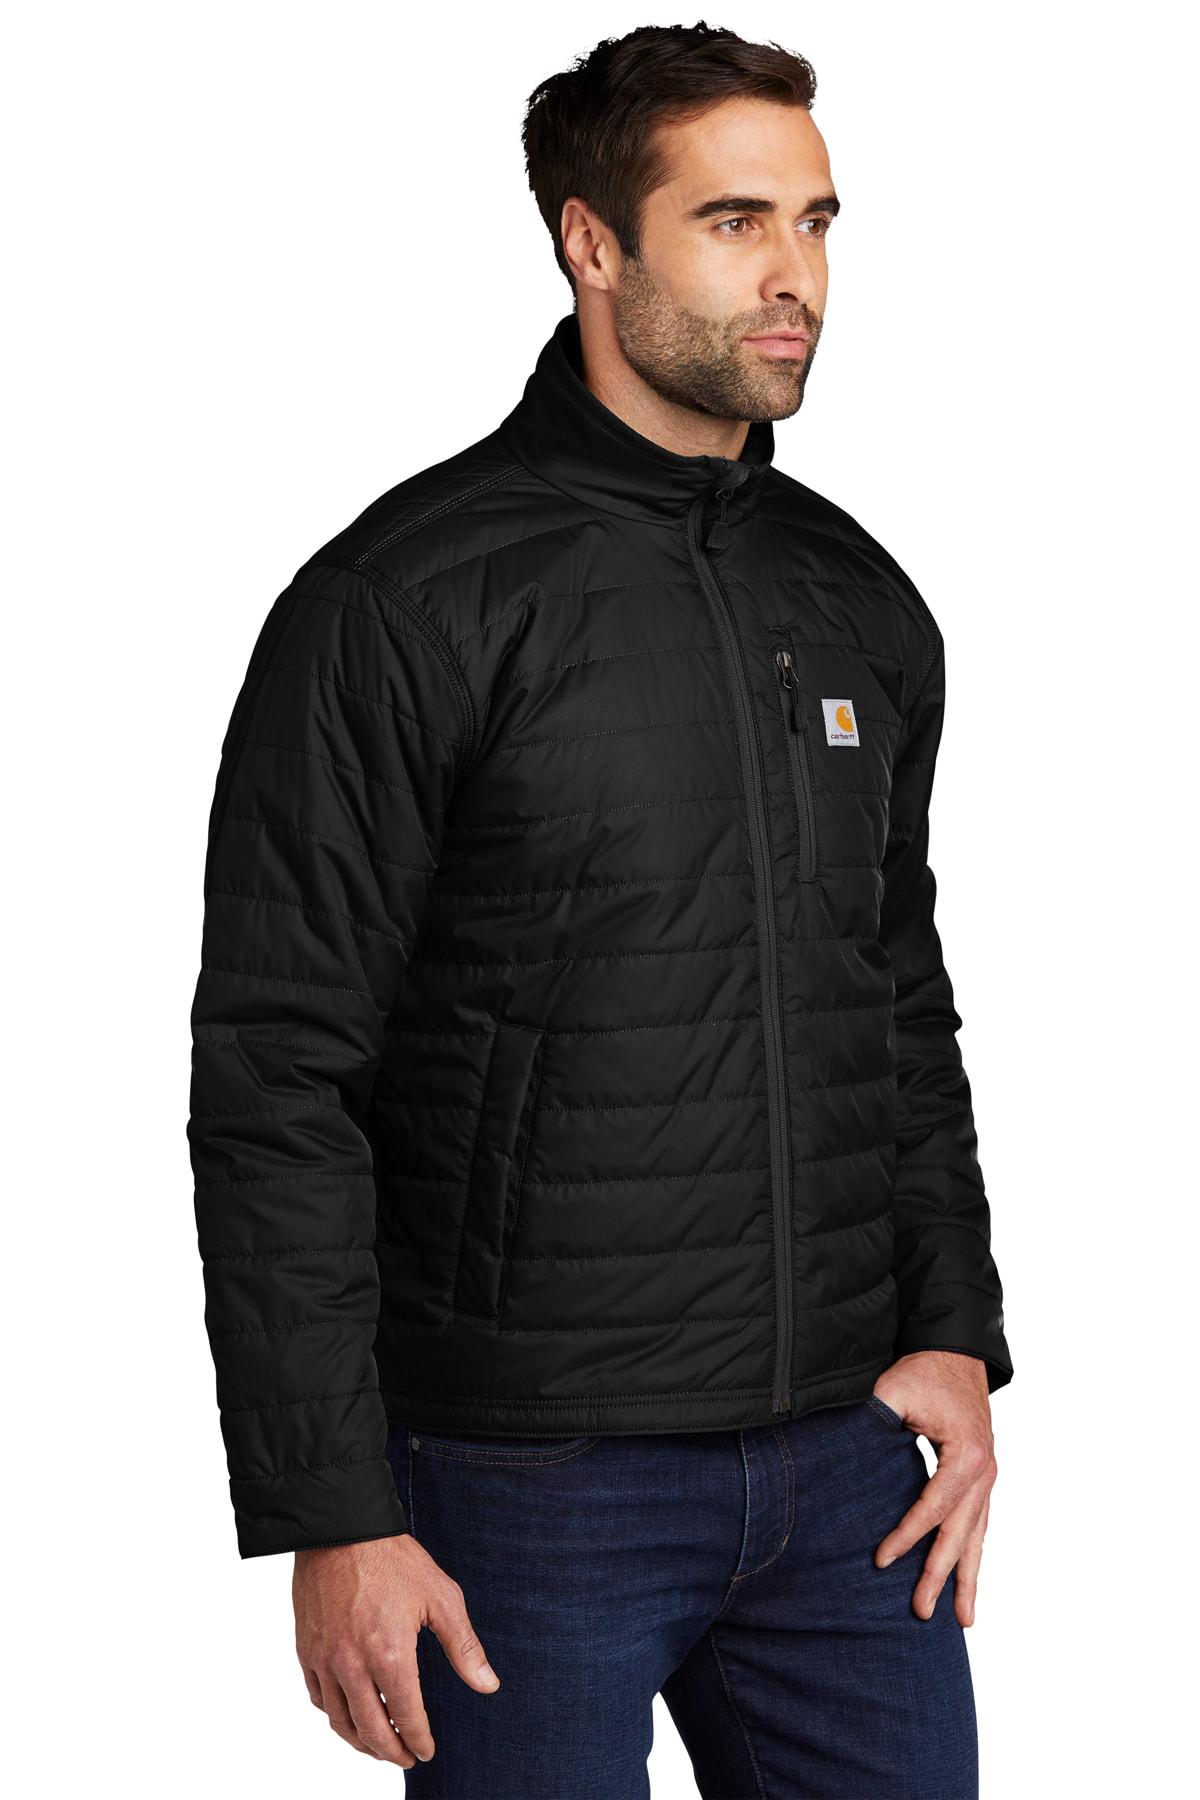 CLCT102208 Carhartt Gilliam Puffy Jacket [Large Black]